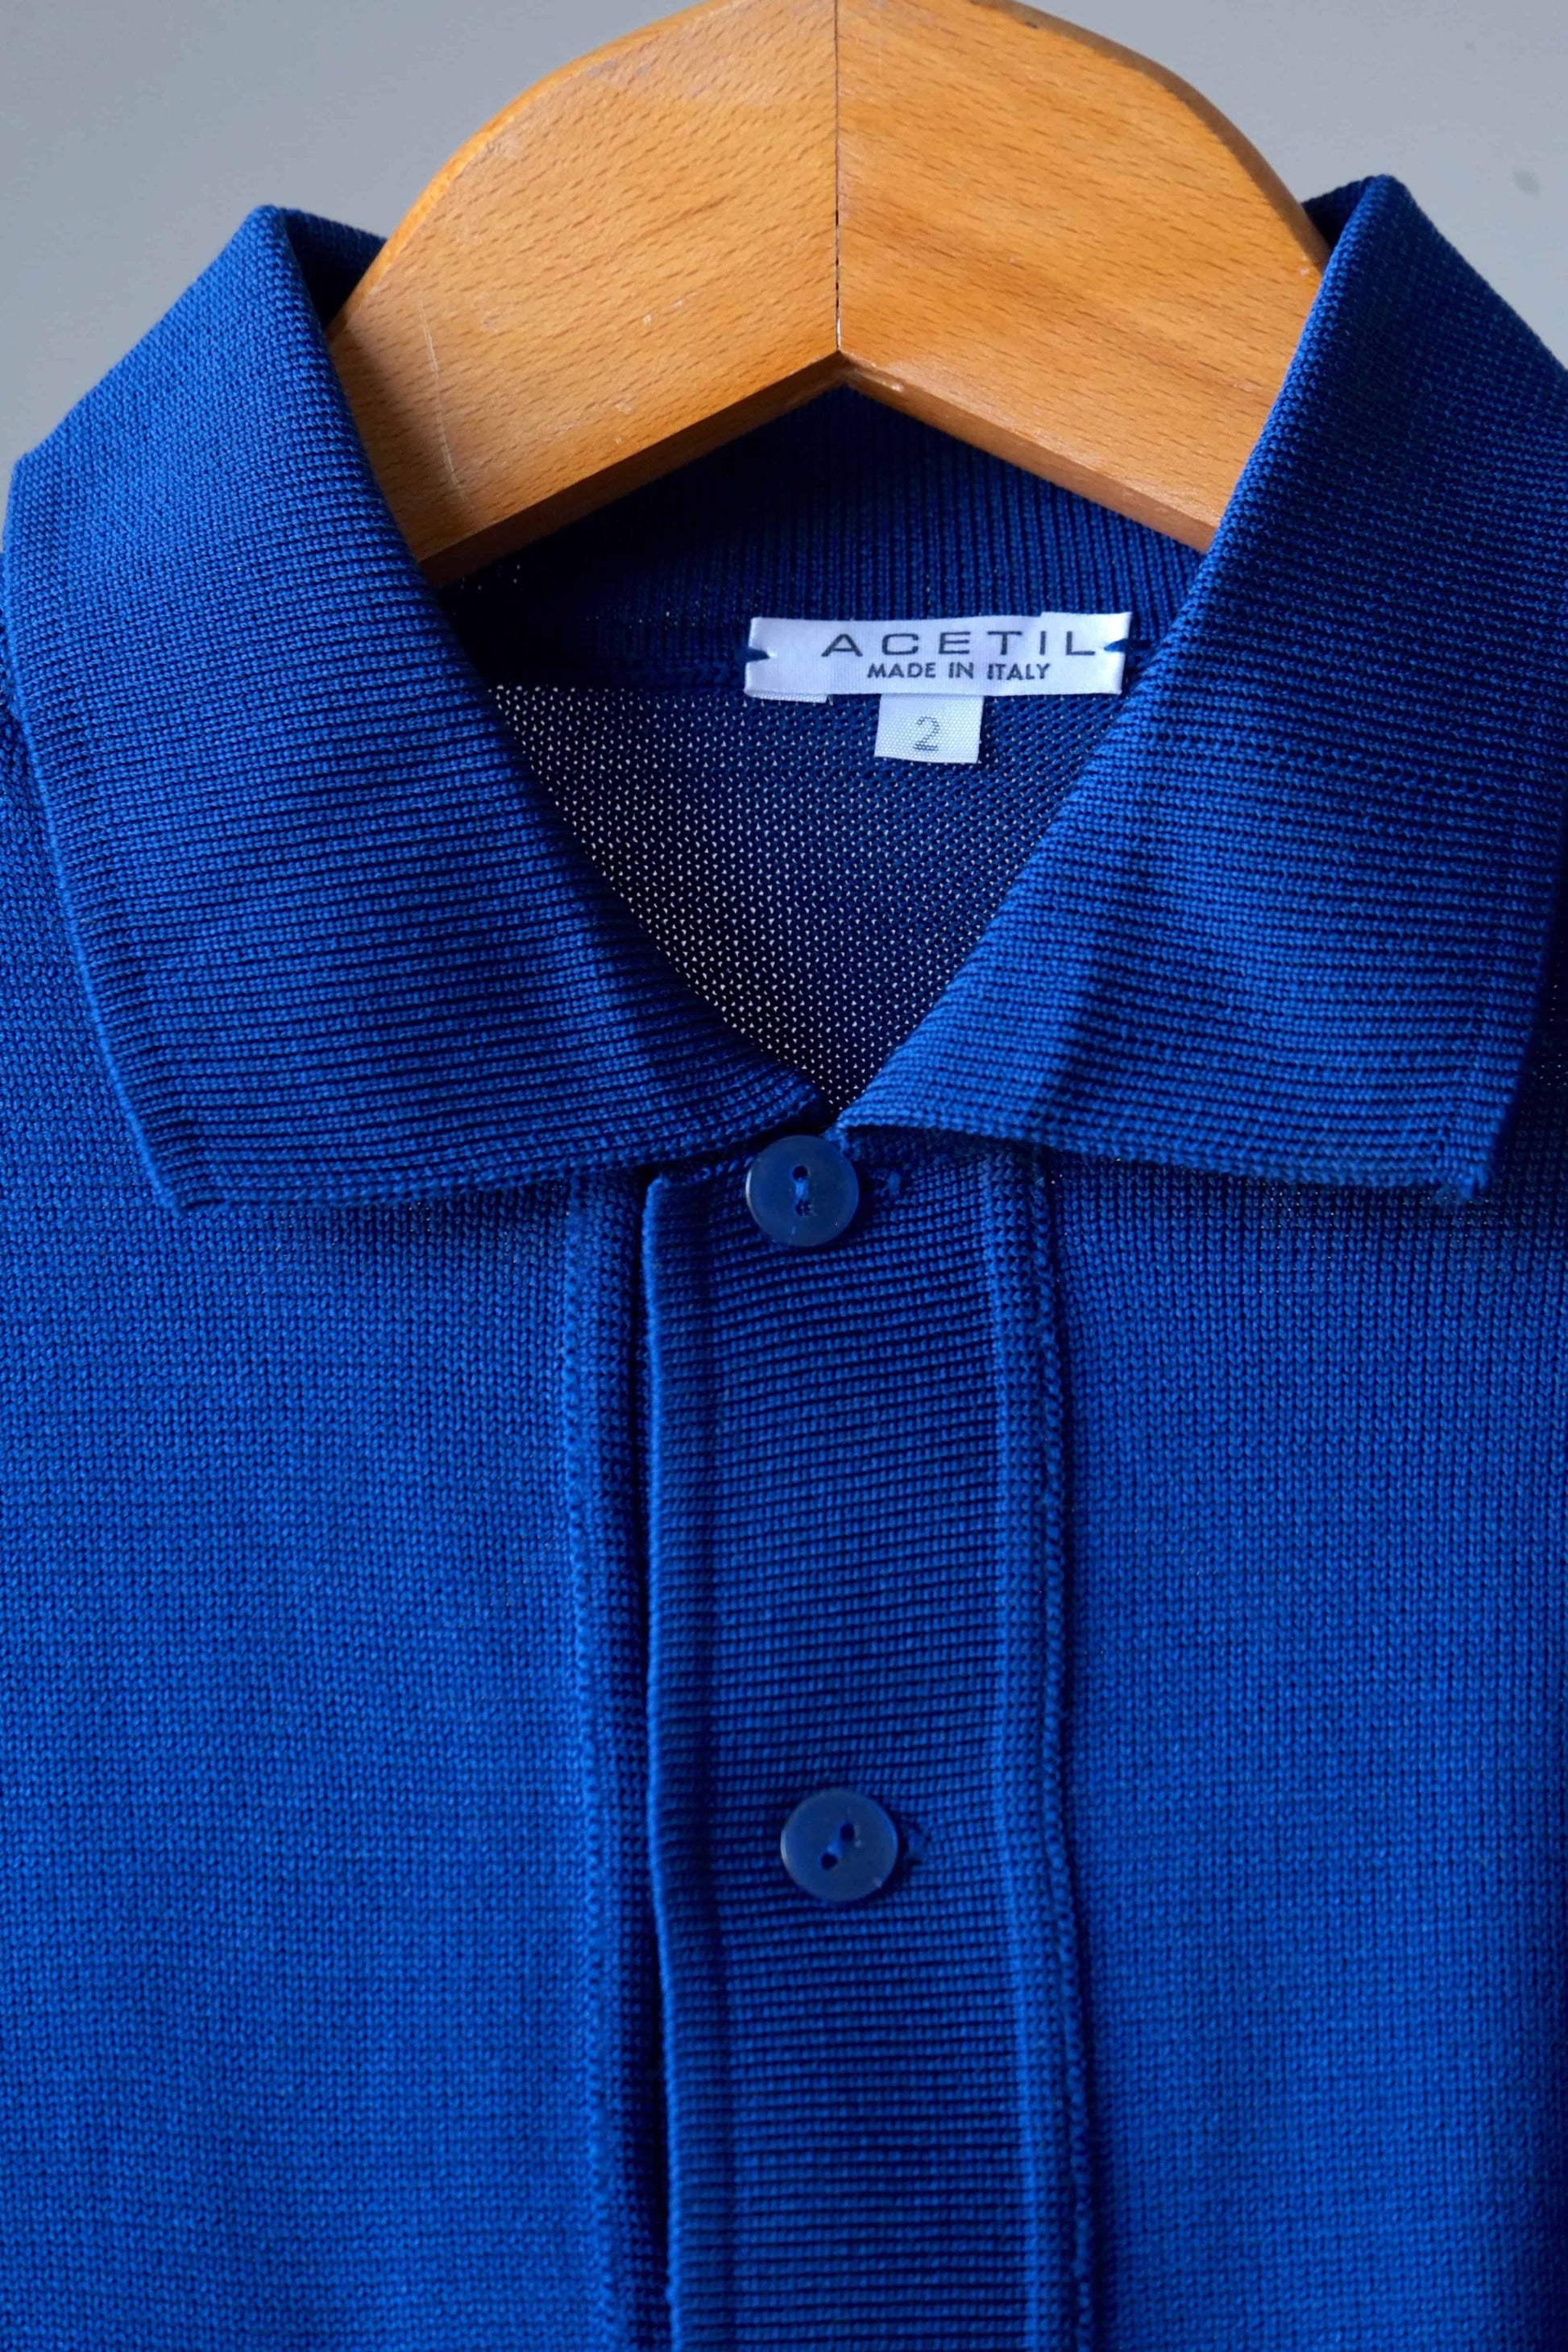 60's Knit Polo Shirt blue close up